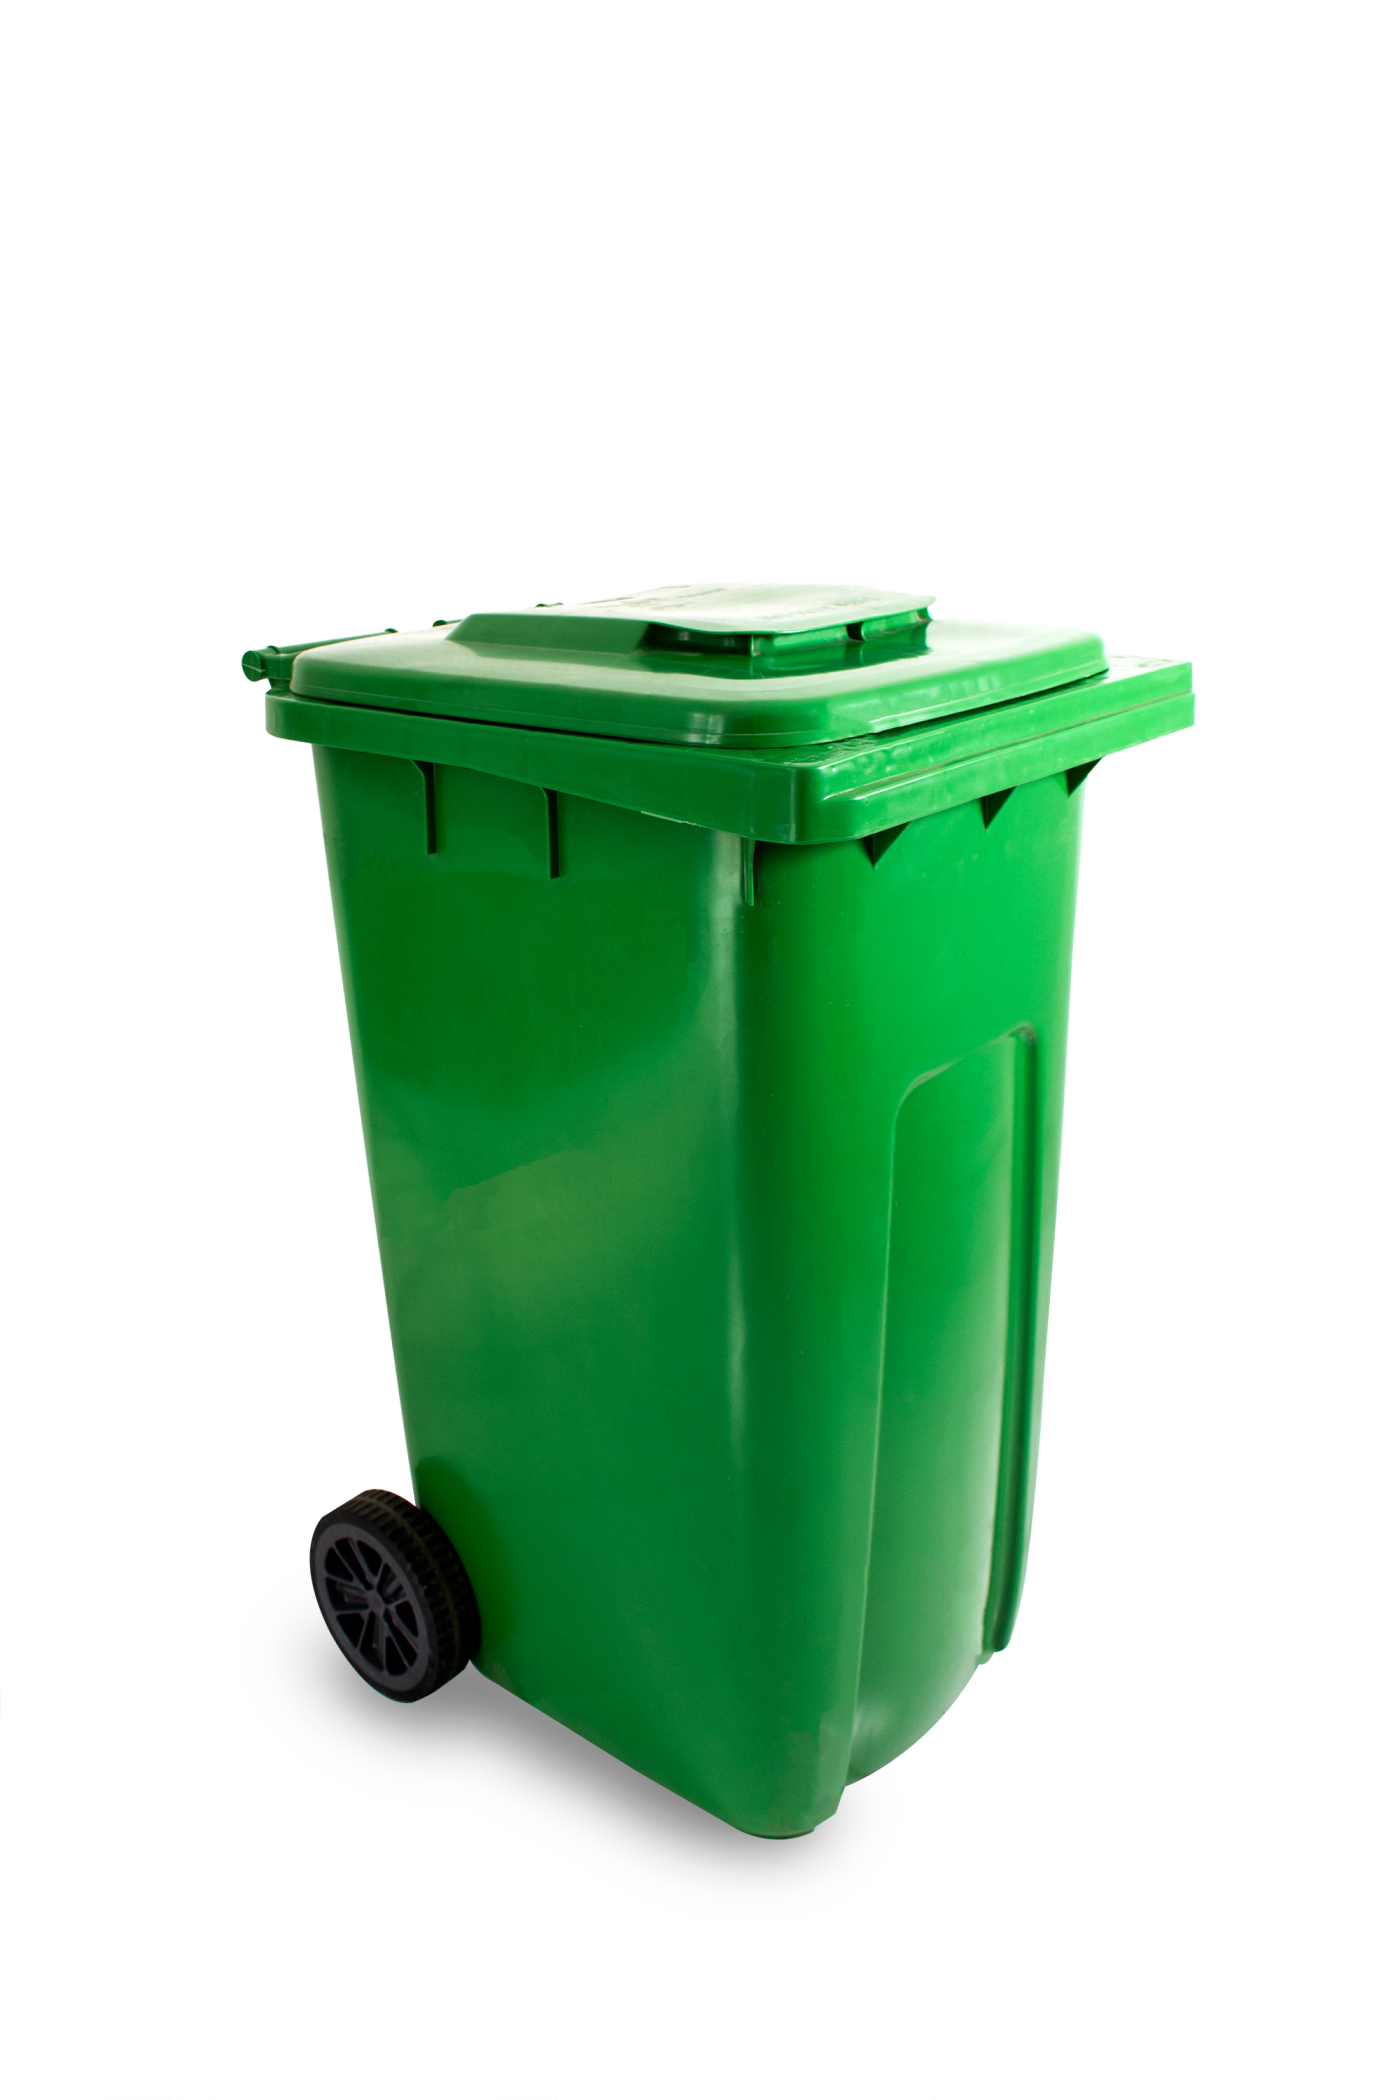 Green big size wheelie bin in a street. Garbage container ready